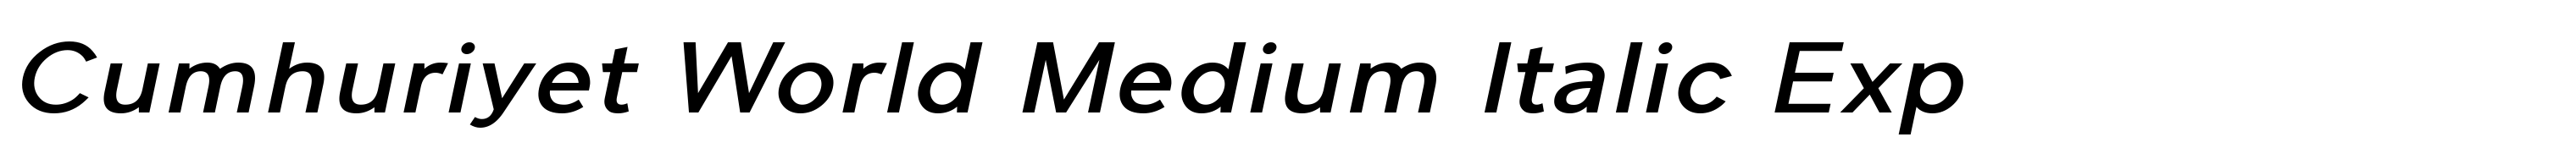 Cumhuriyet World Medium Italic Exp